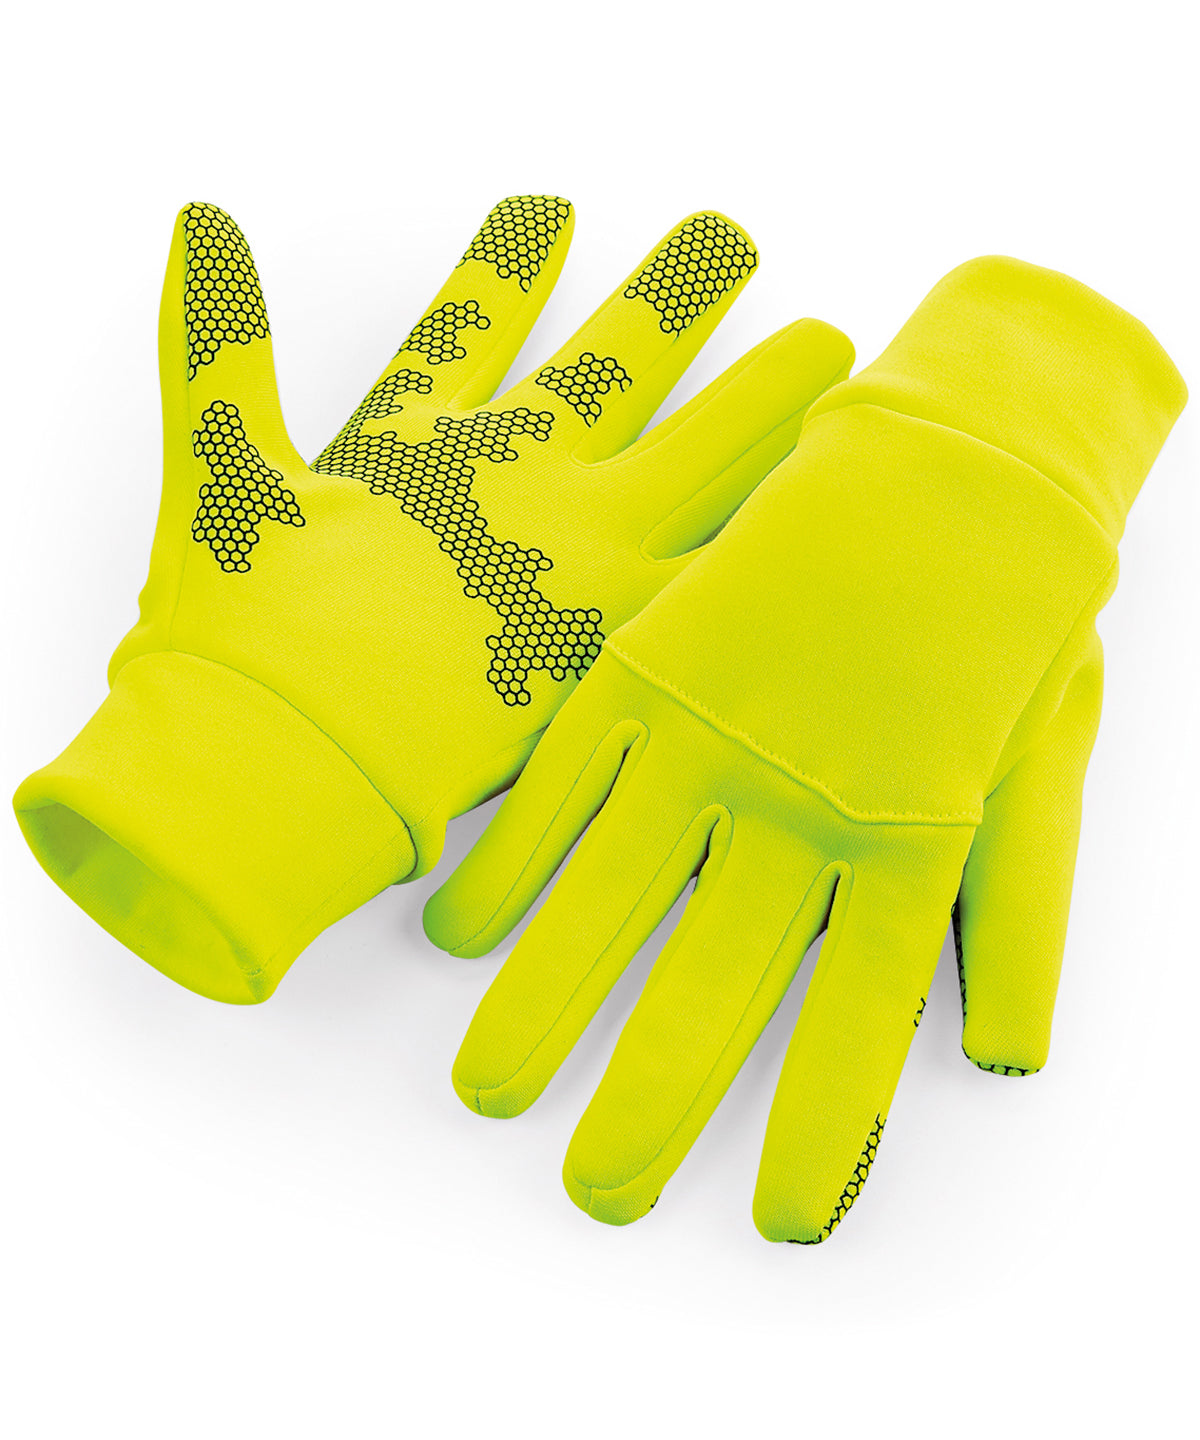 Softshell Sports Tech Gloves